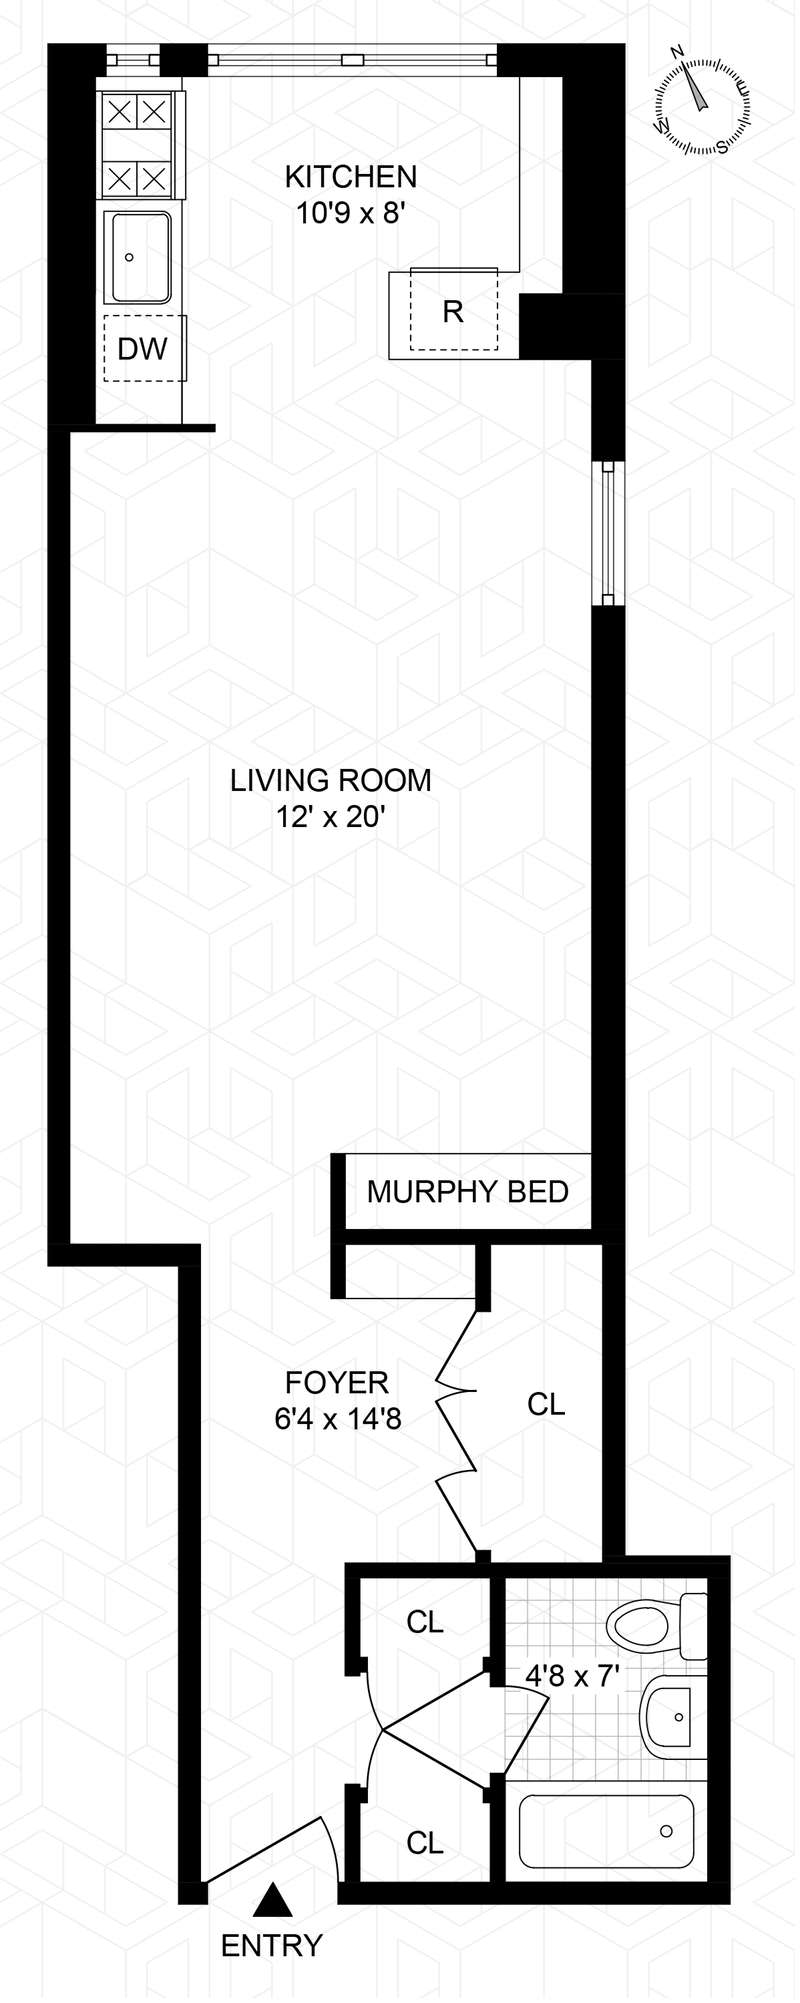 Floorplan for 305 East 40th Street, 2T